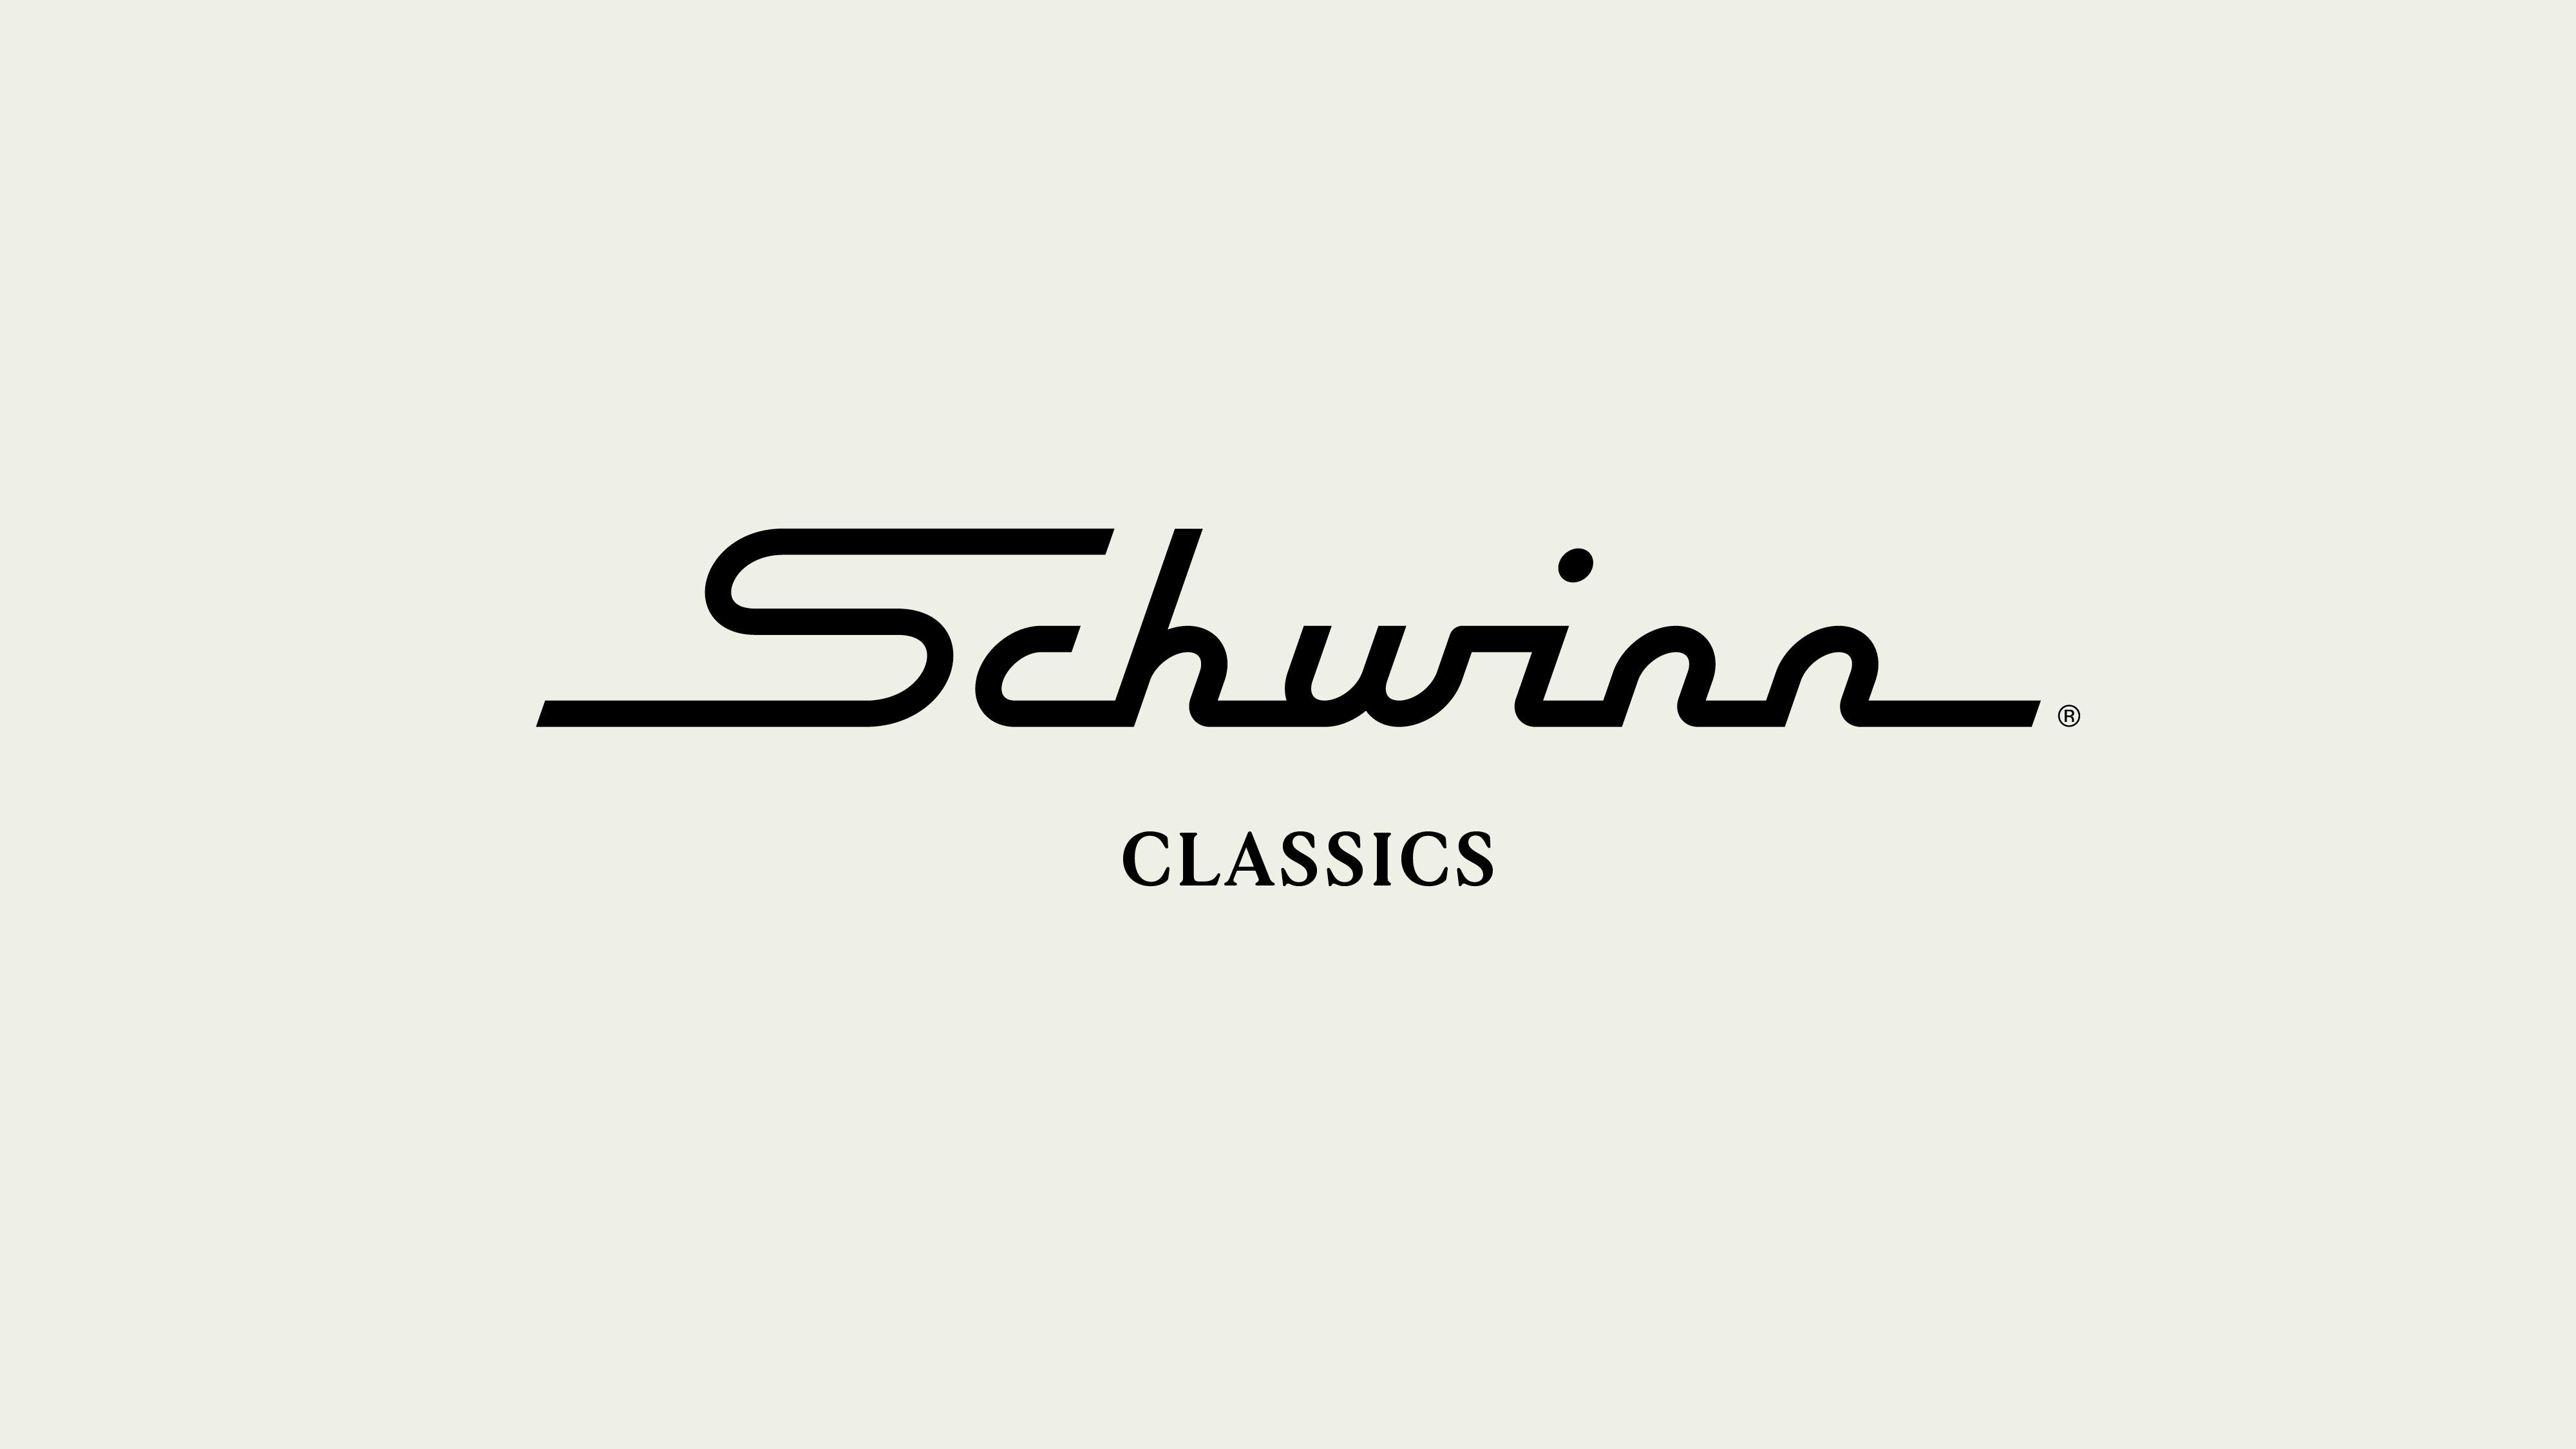 Schwinn classics logo